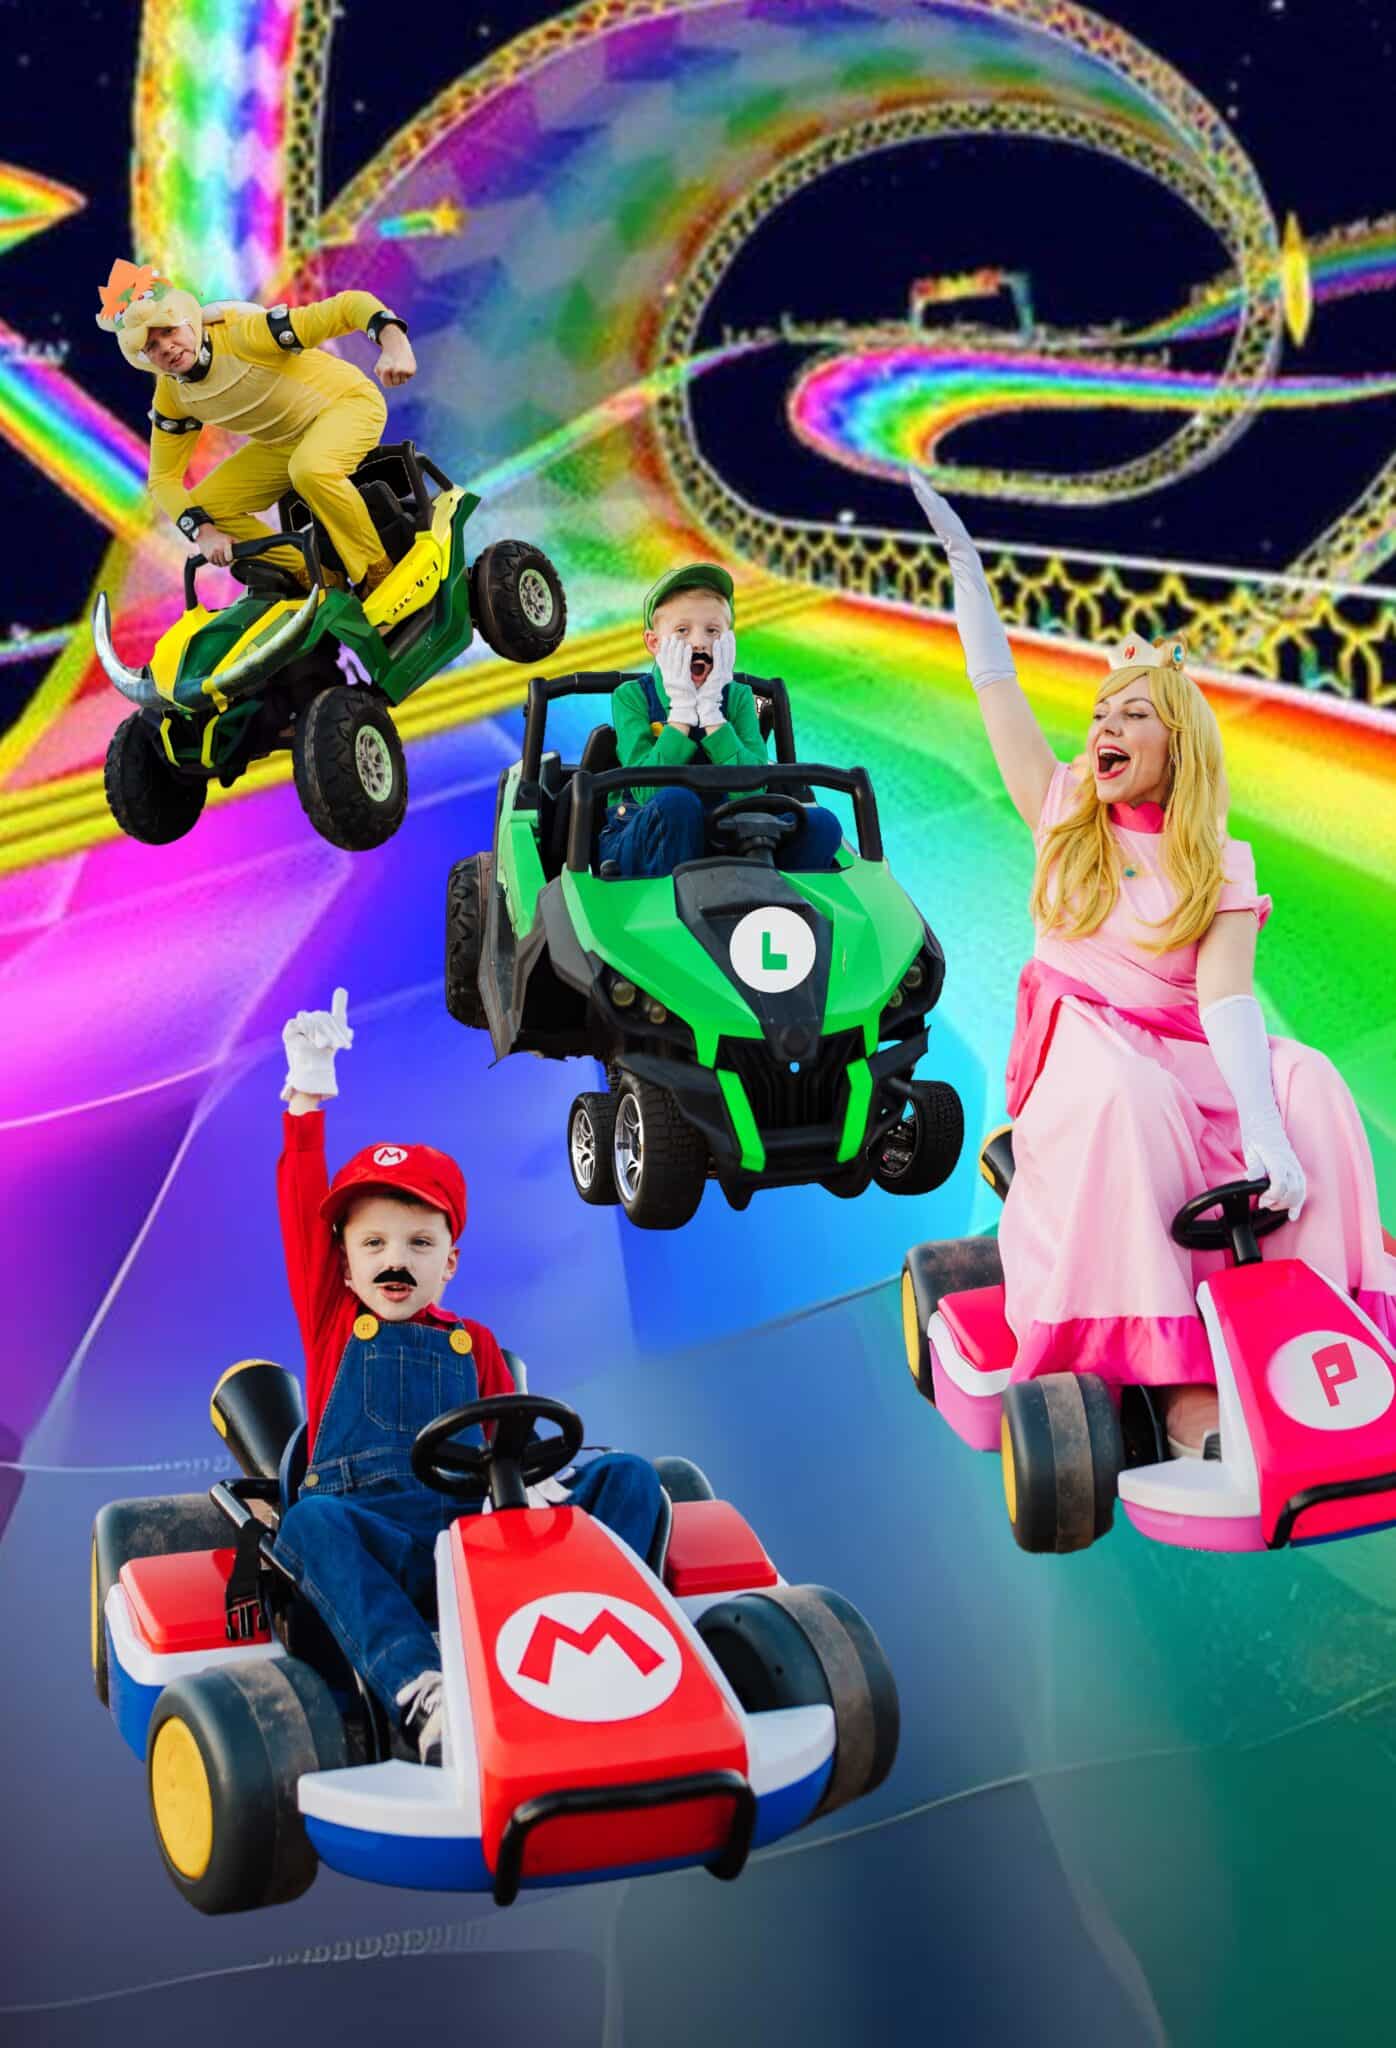 Mario Kart Costume with family Photoshopped onto Rainbow Road. 